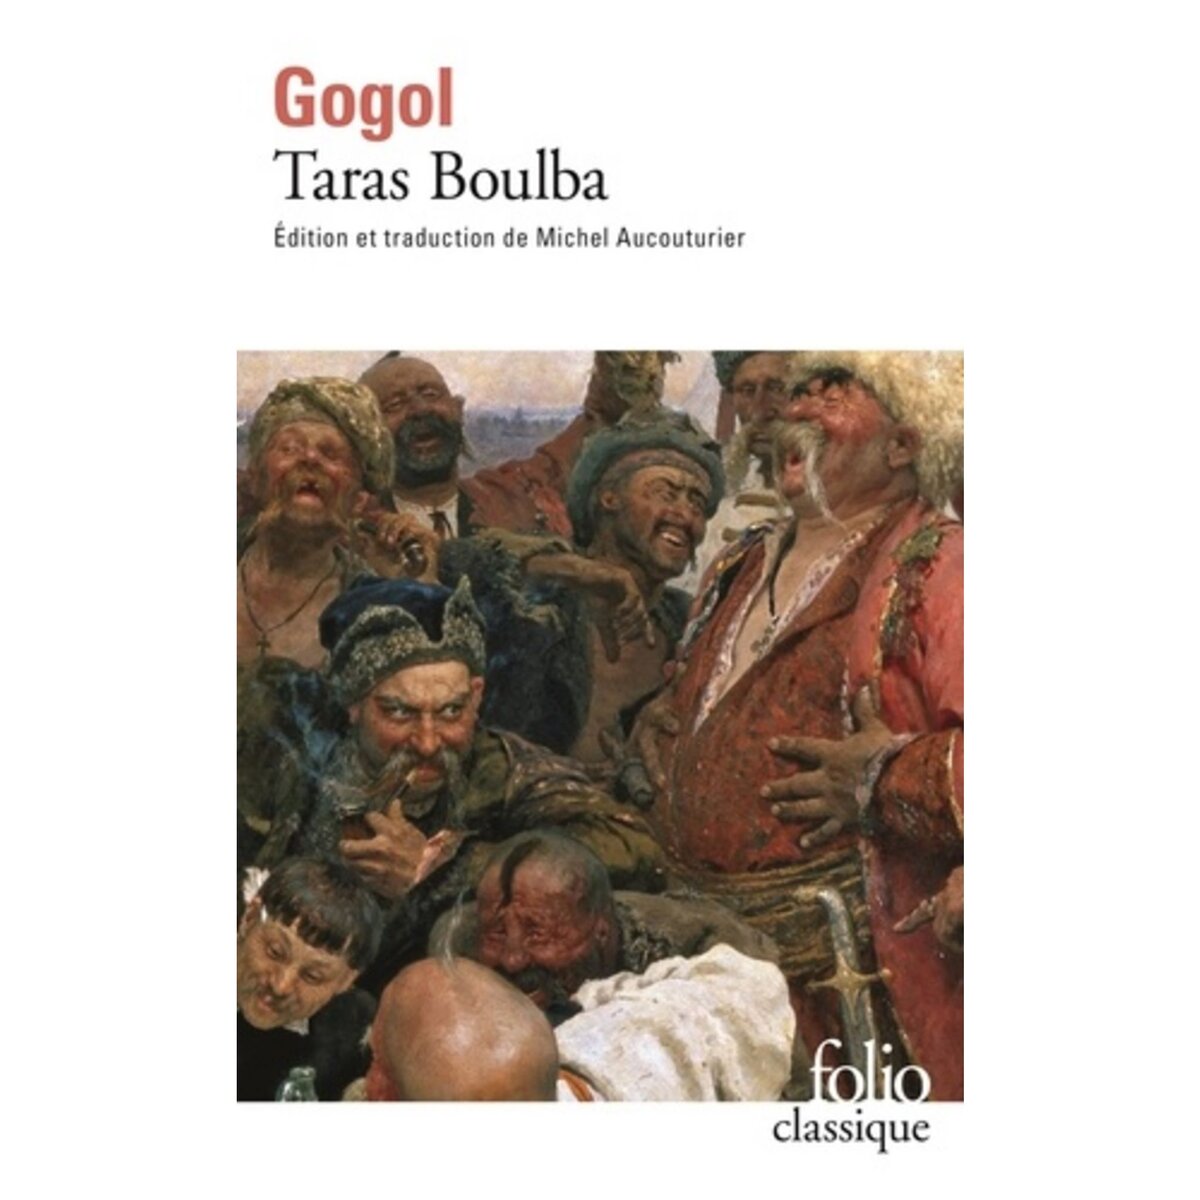  TARAS BOULBA, Gogol Nicolas